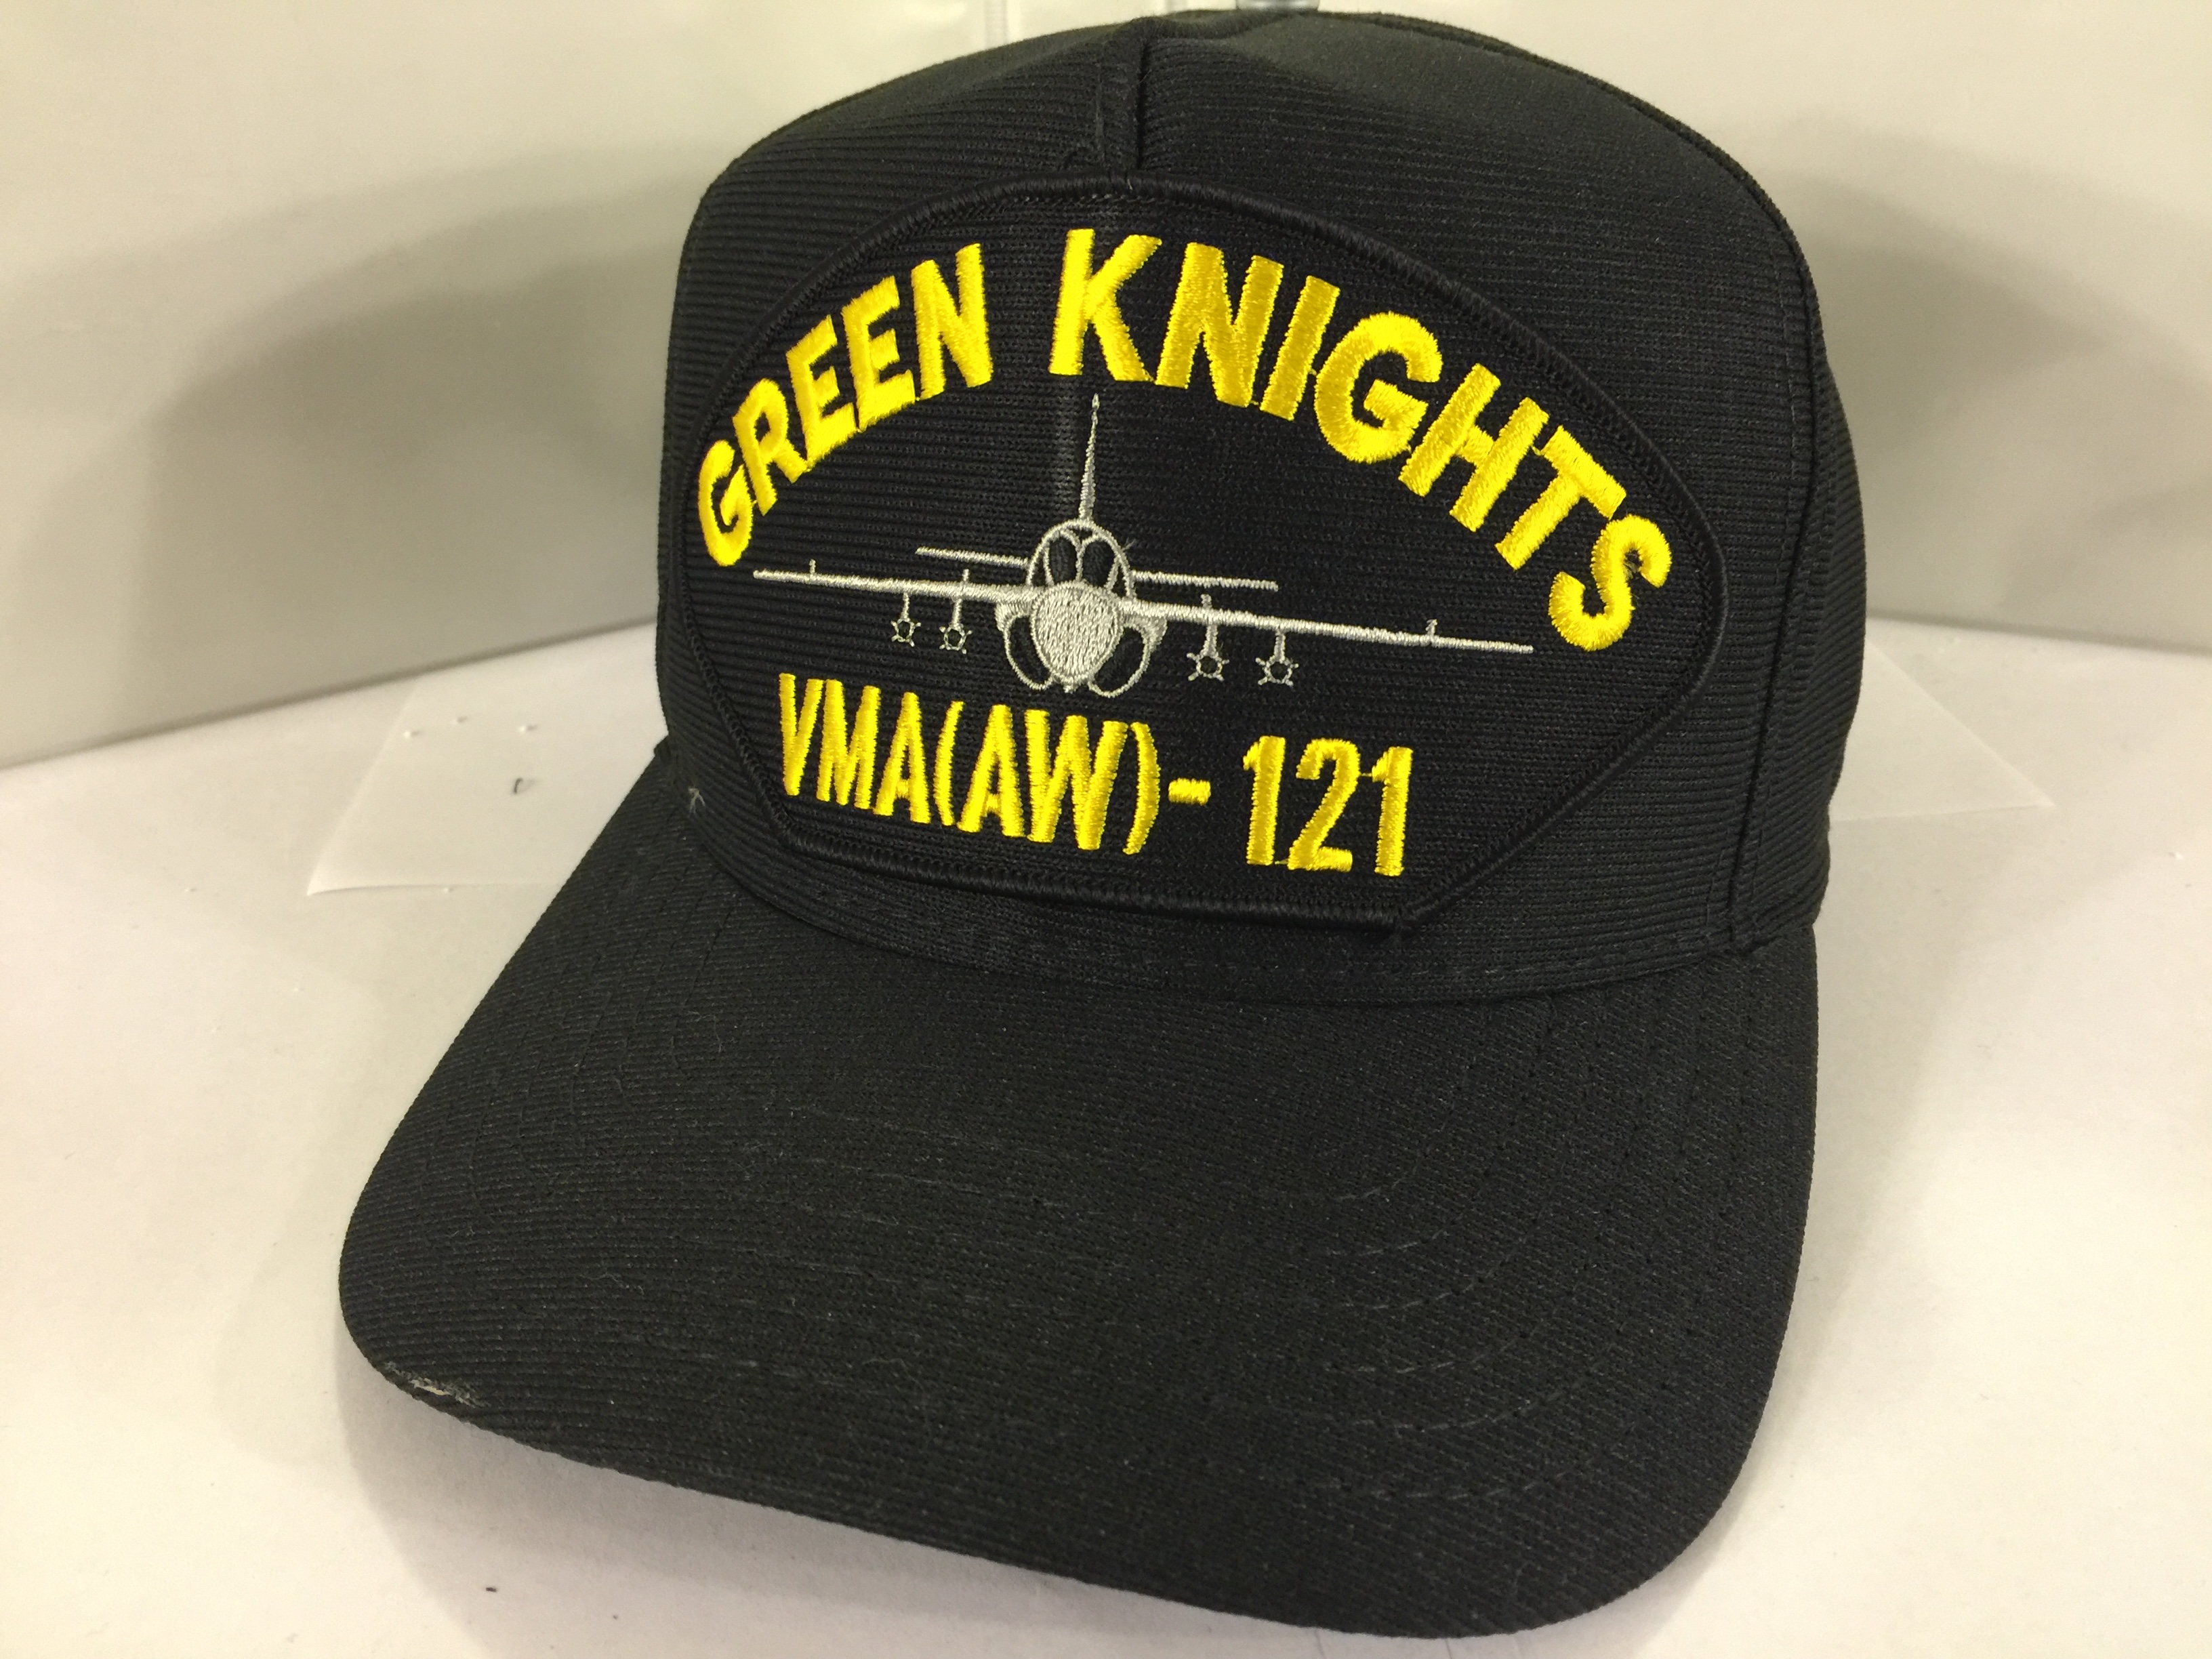 USMC VMA(AW)-121 GREEN KNIGHTS Ballcap (Black)